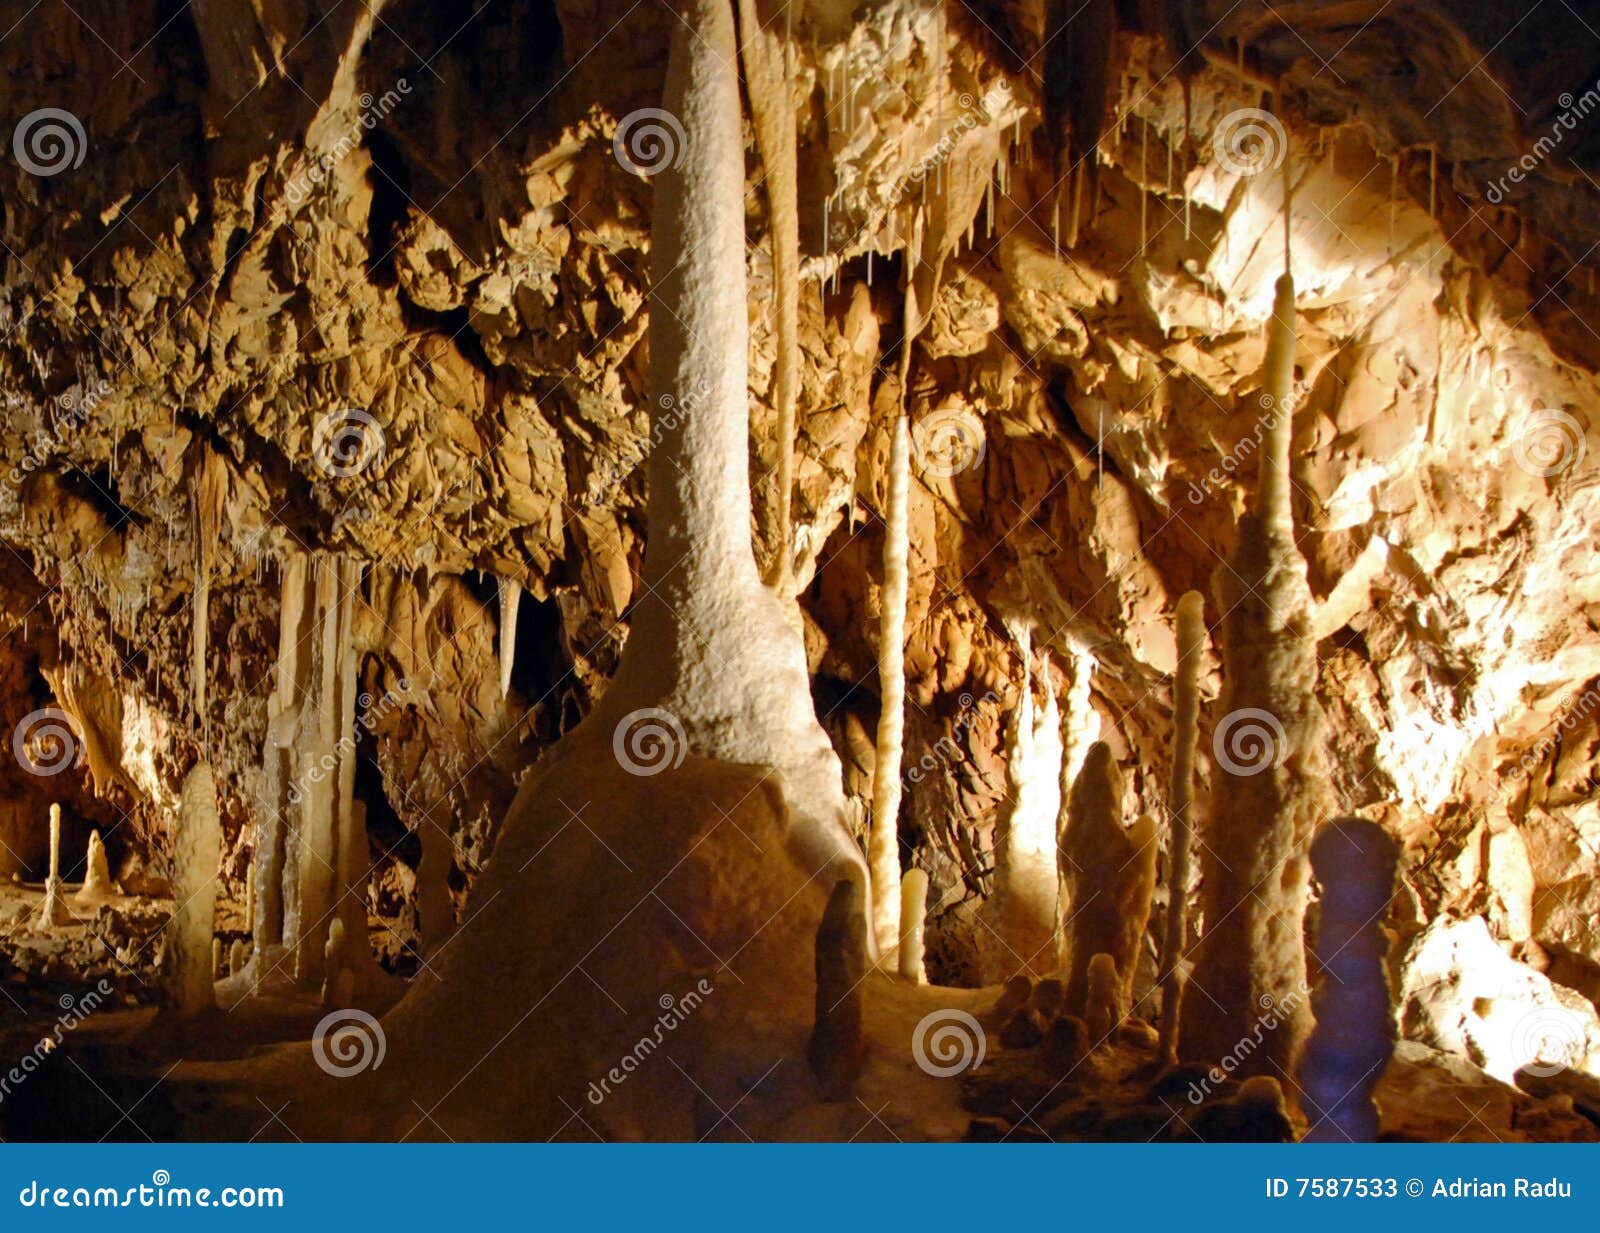 stalactite & stalagmite